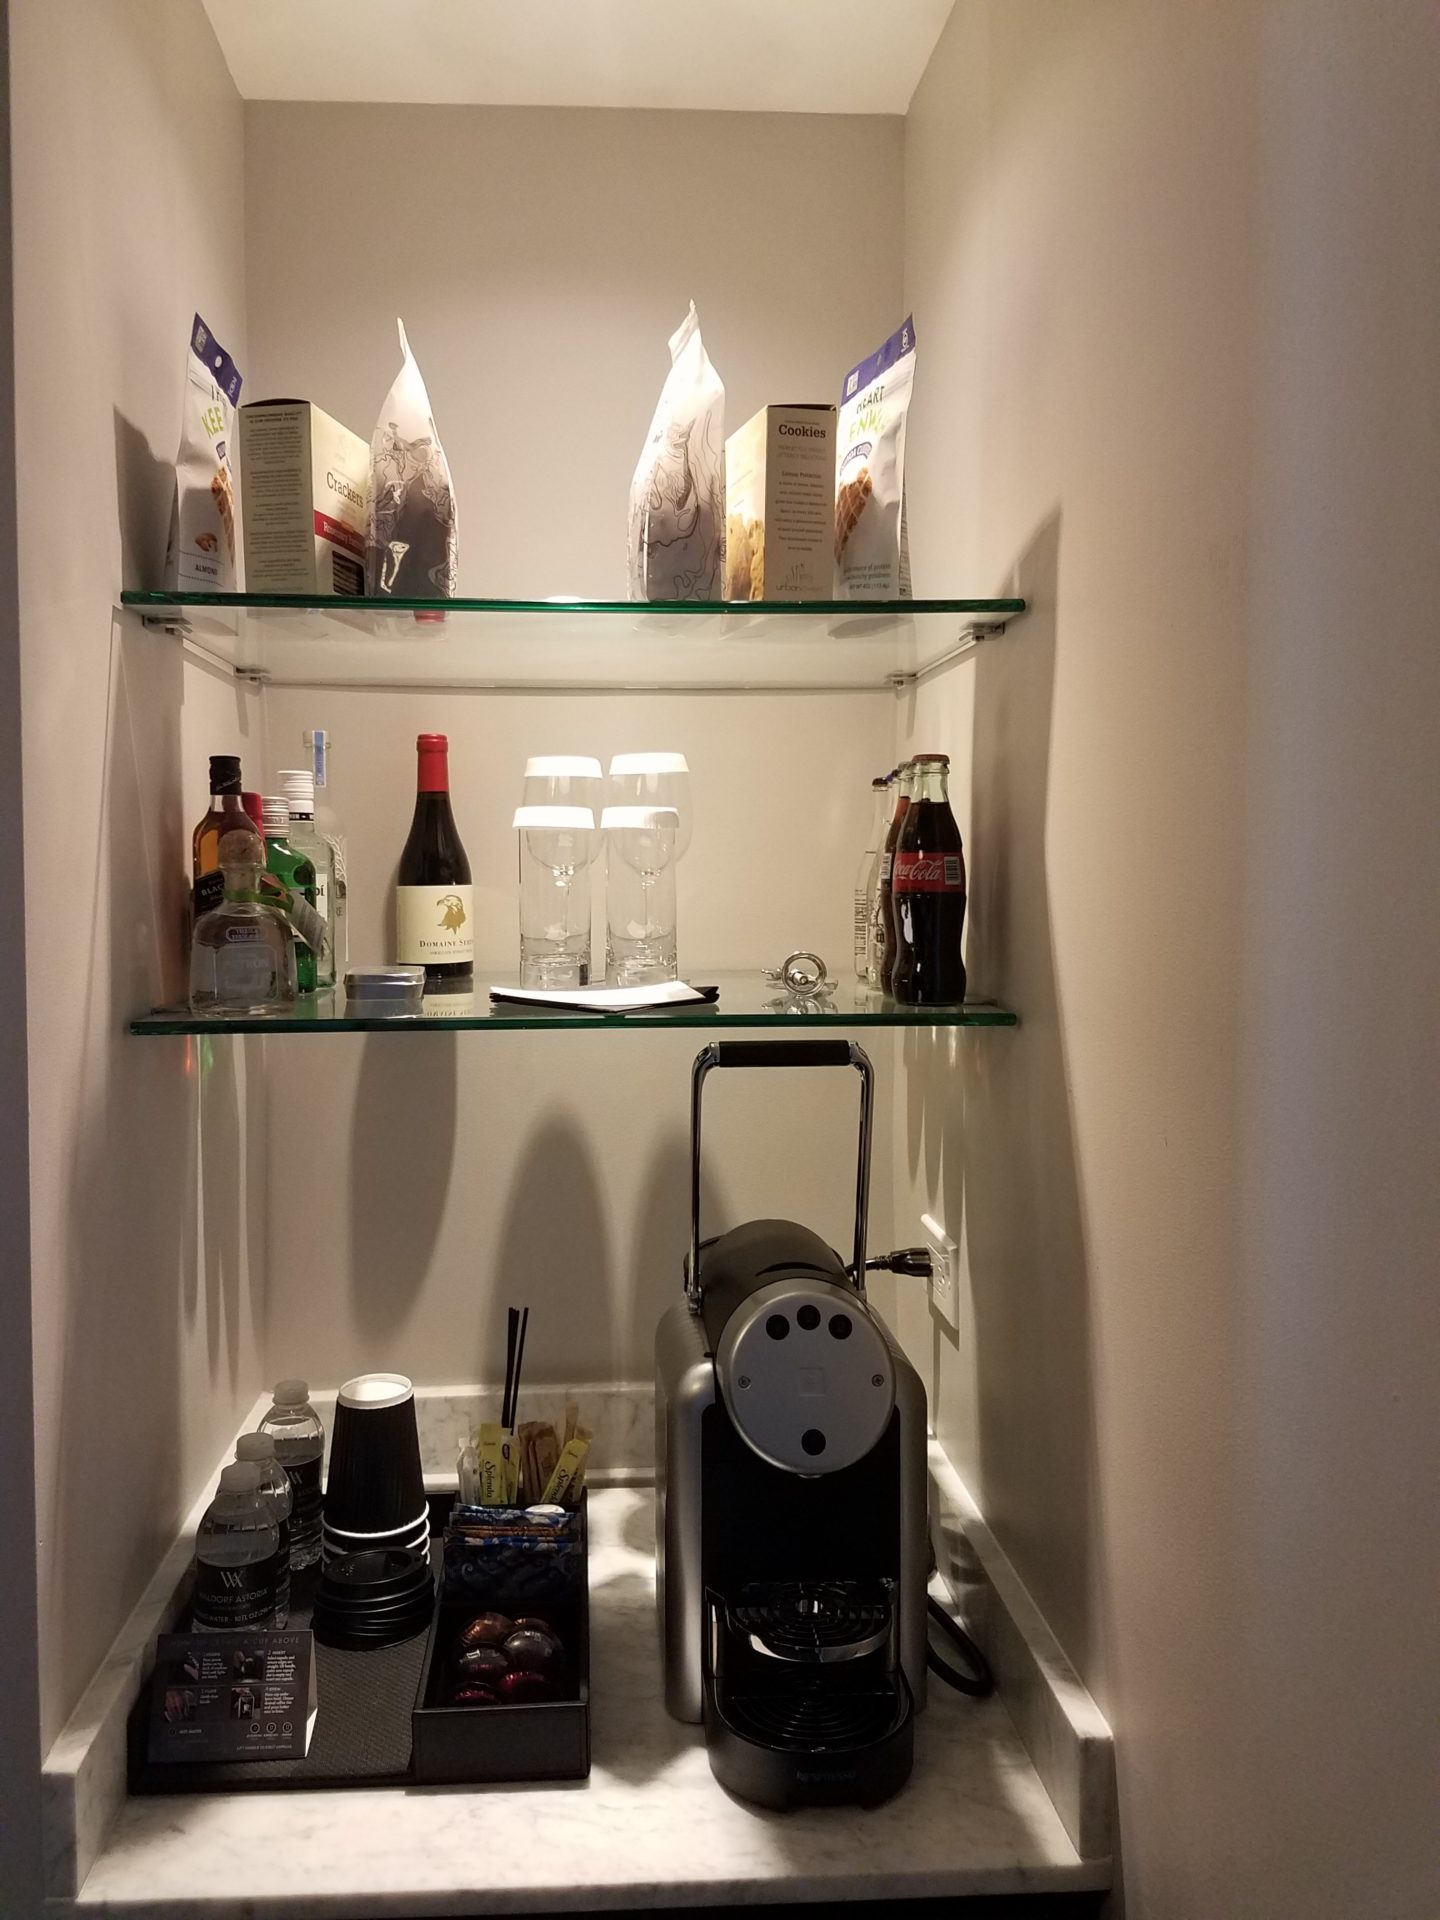 a shelf with glass shelves and coffee machine